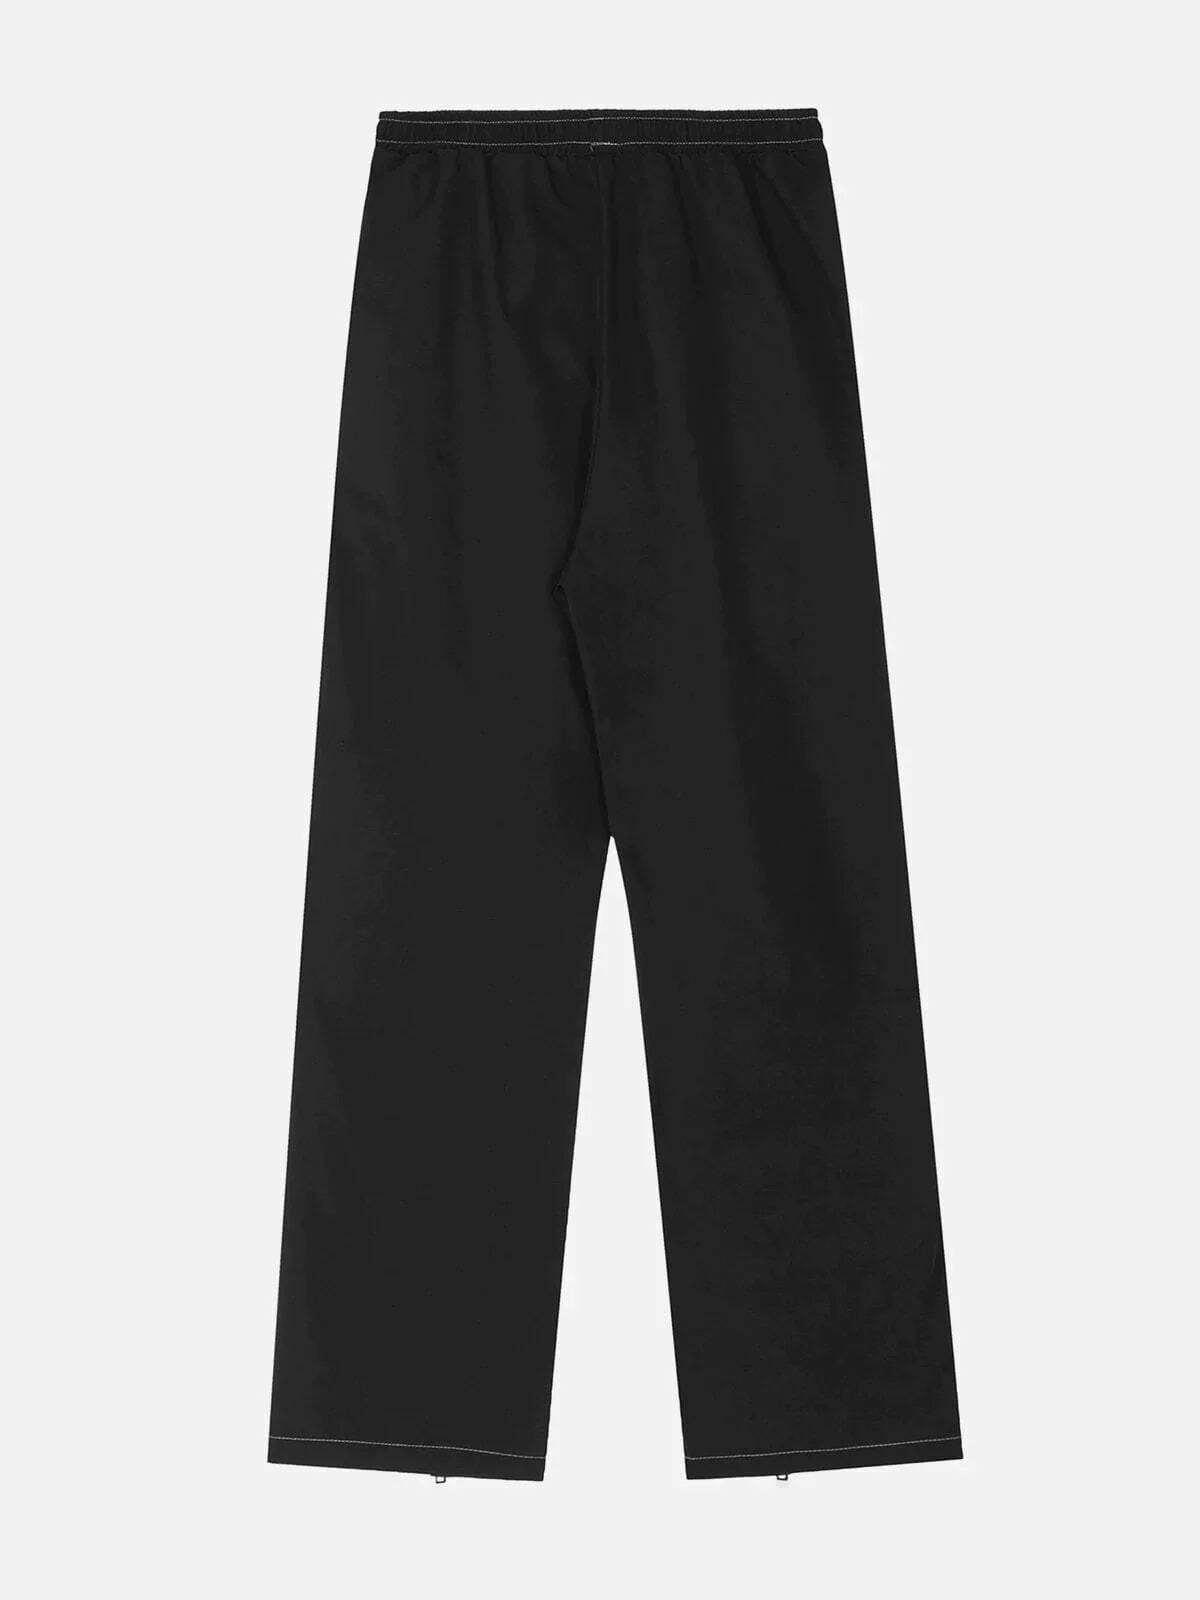 revolutionary splicing zip pants edgy & urban streetwear 3678